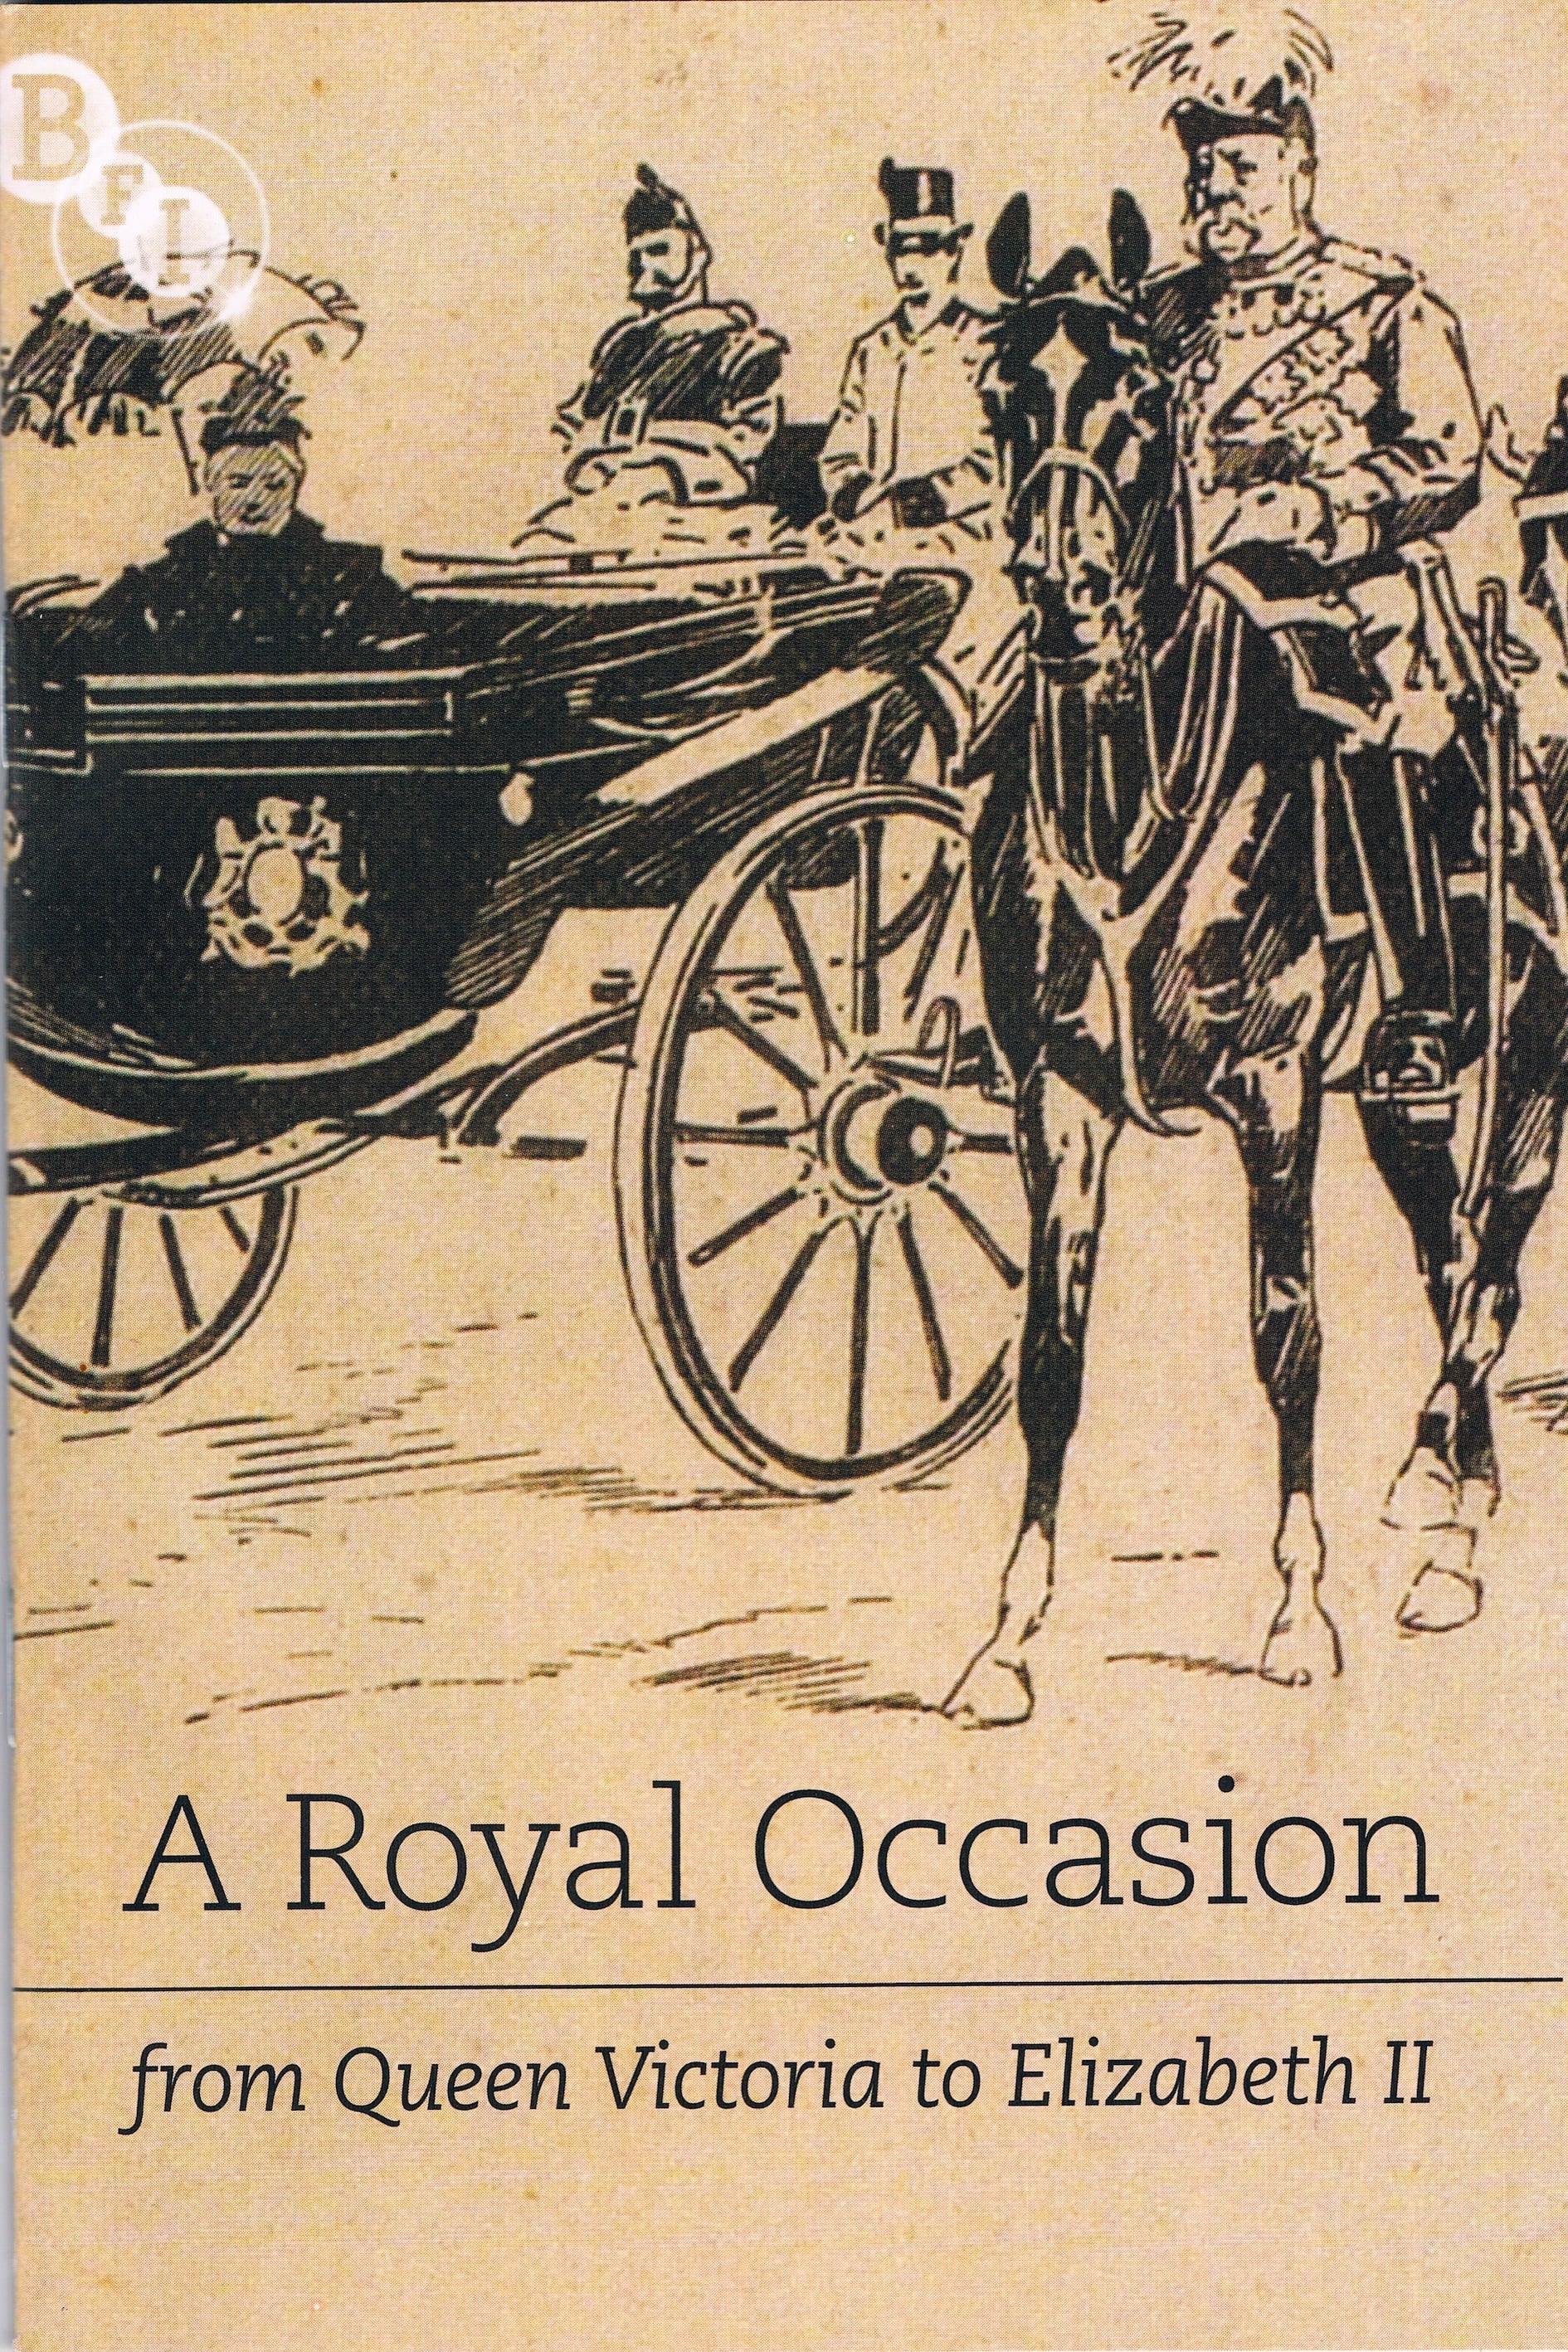 Queen Alexandra's Drive Through London: Topical Budget 252-2